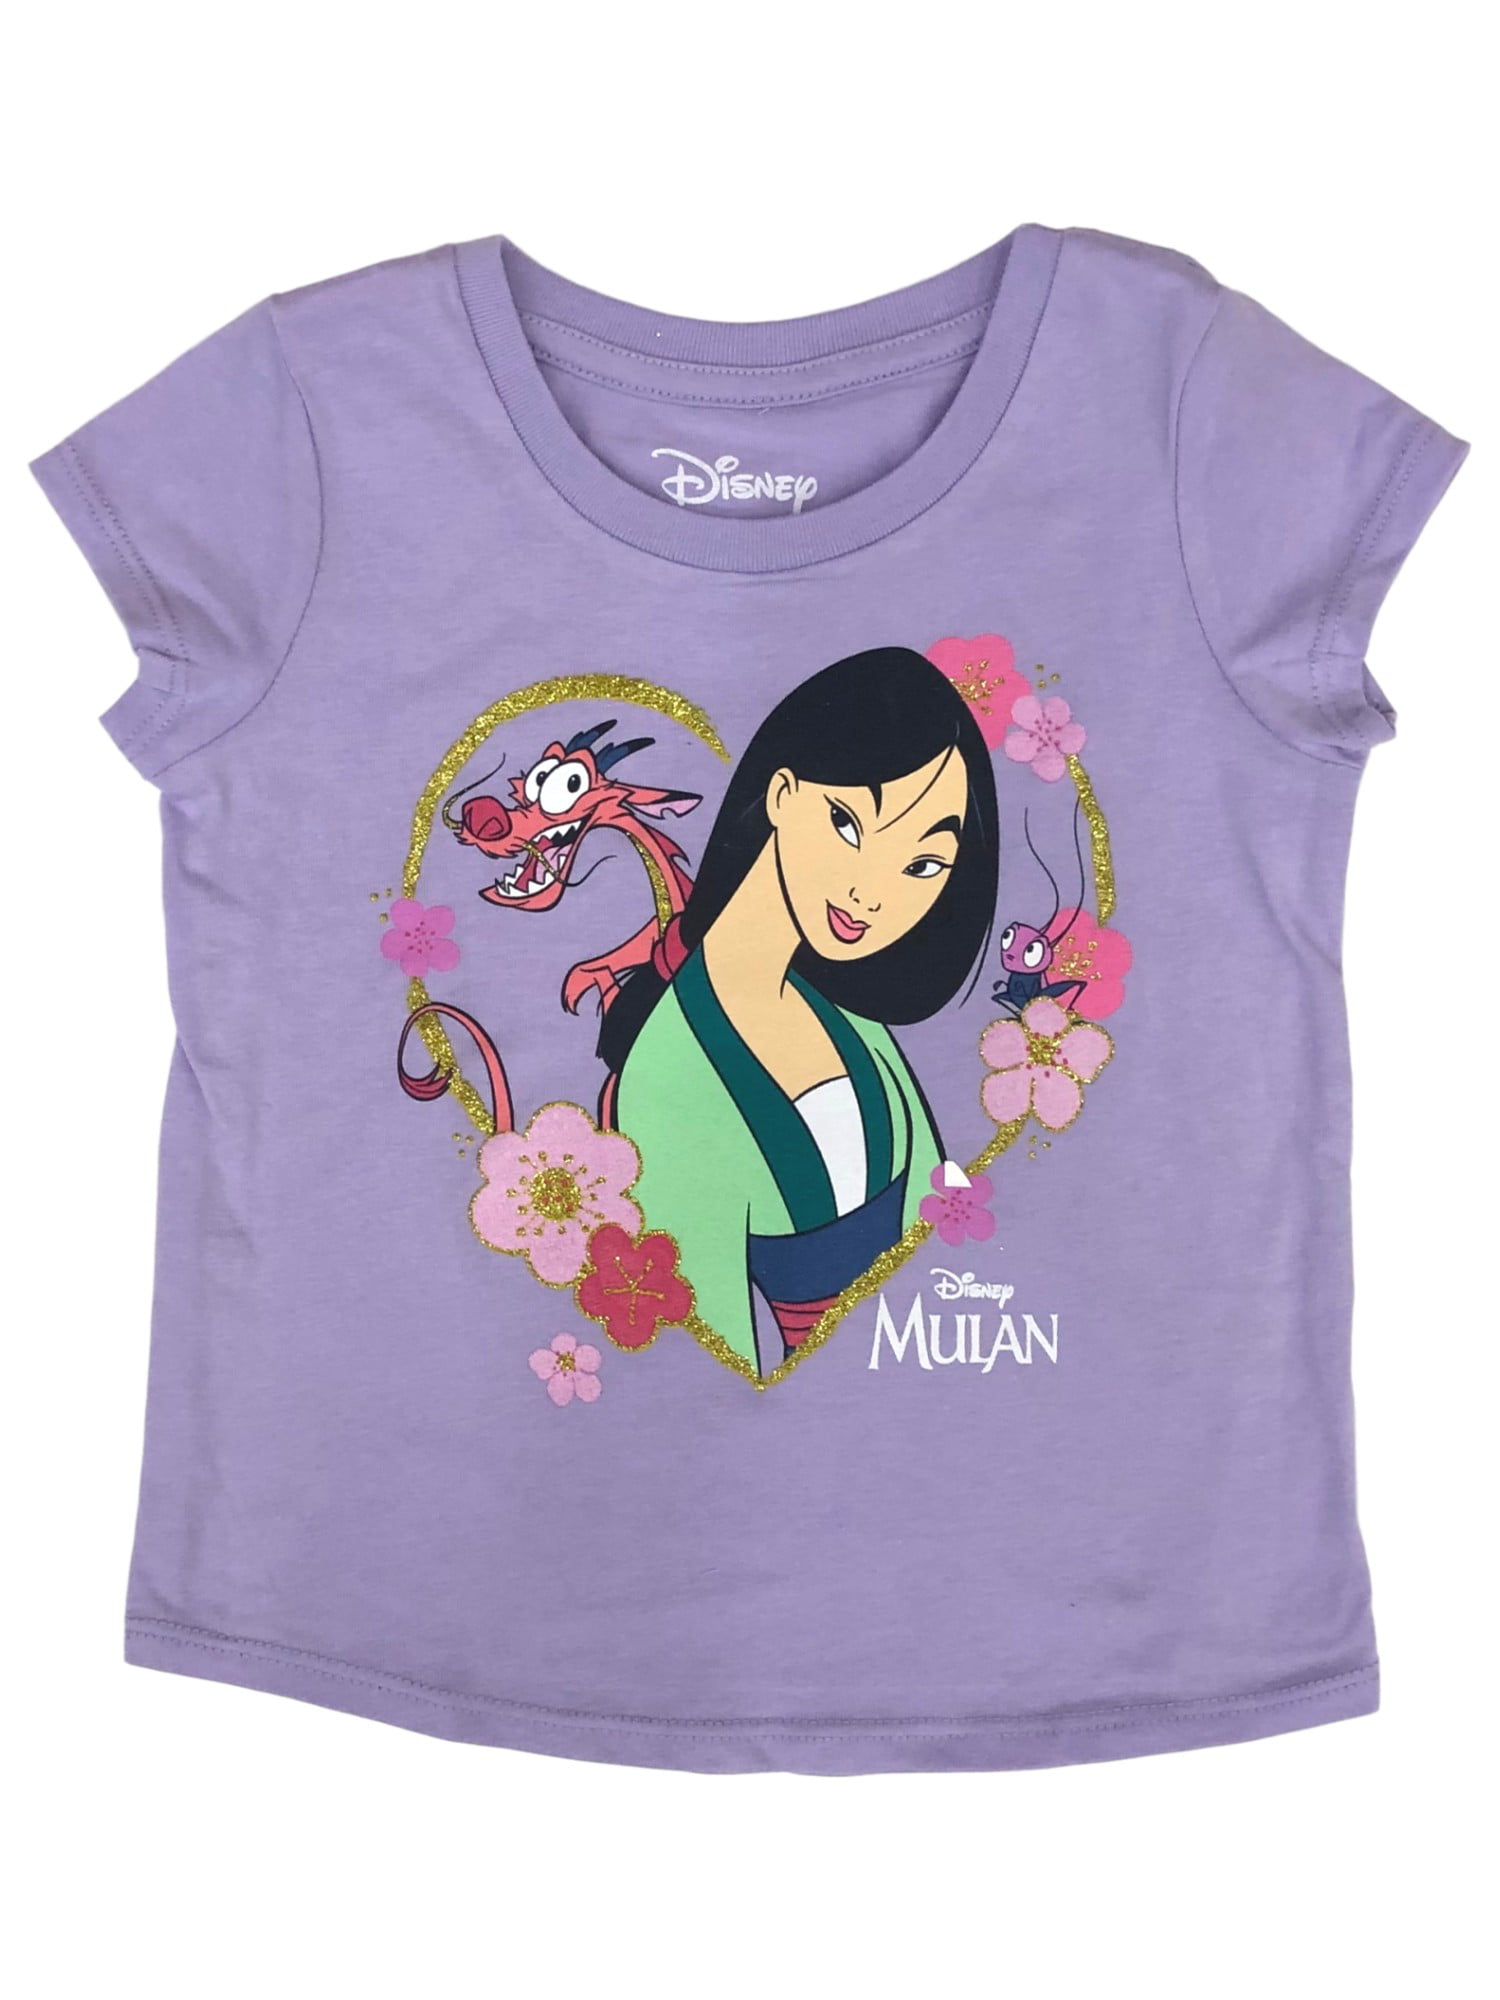 Toddler Tee Jumping 2T Purple Mulan Disney Girls Shirt Beans Sparkle T-Shirt